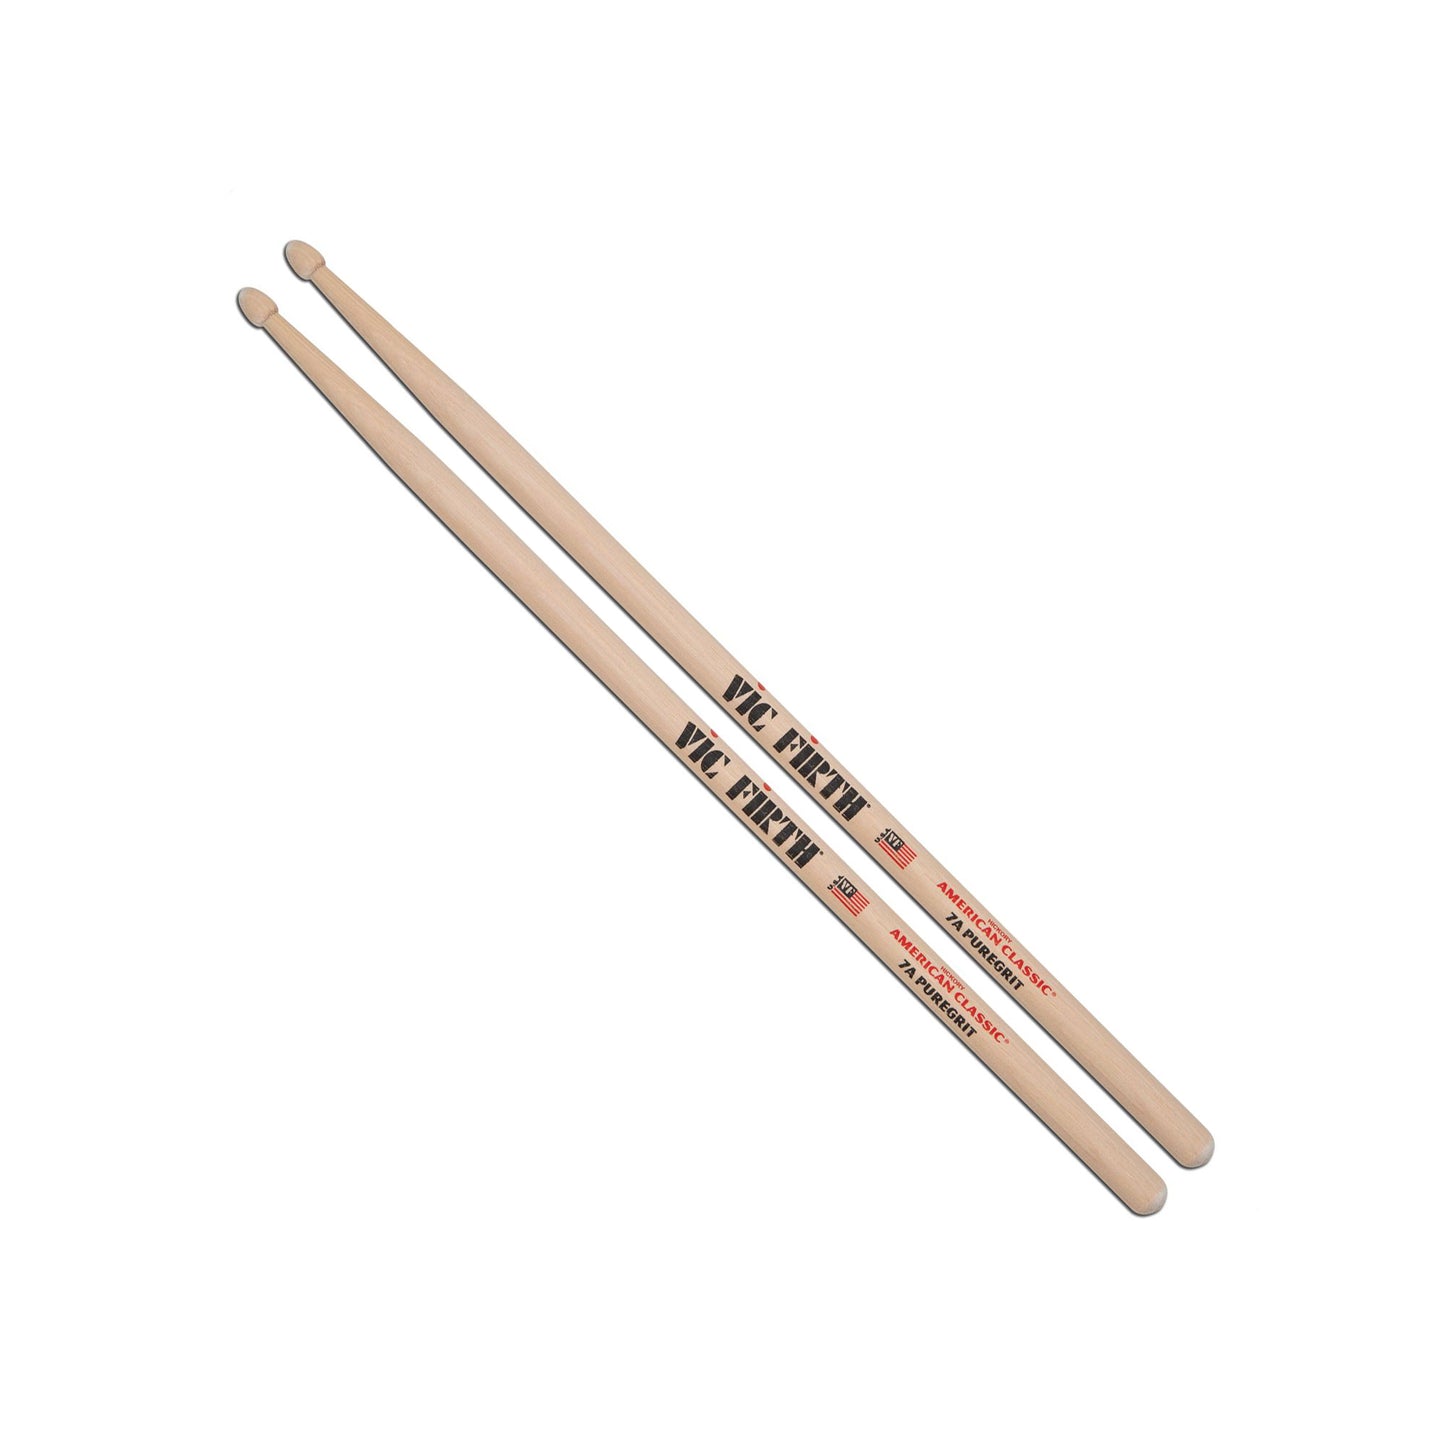 American Classic® 7A PureGrit Drumsticks